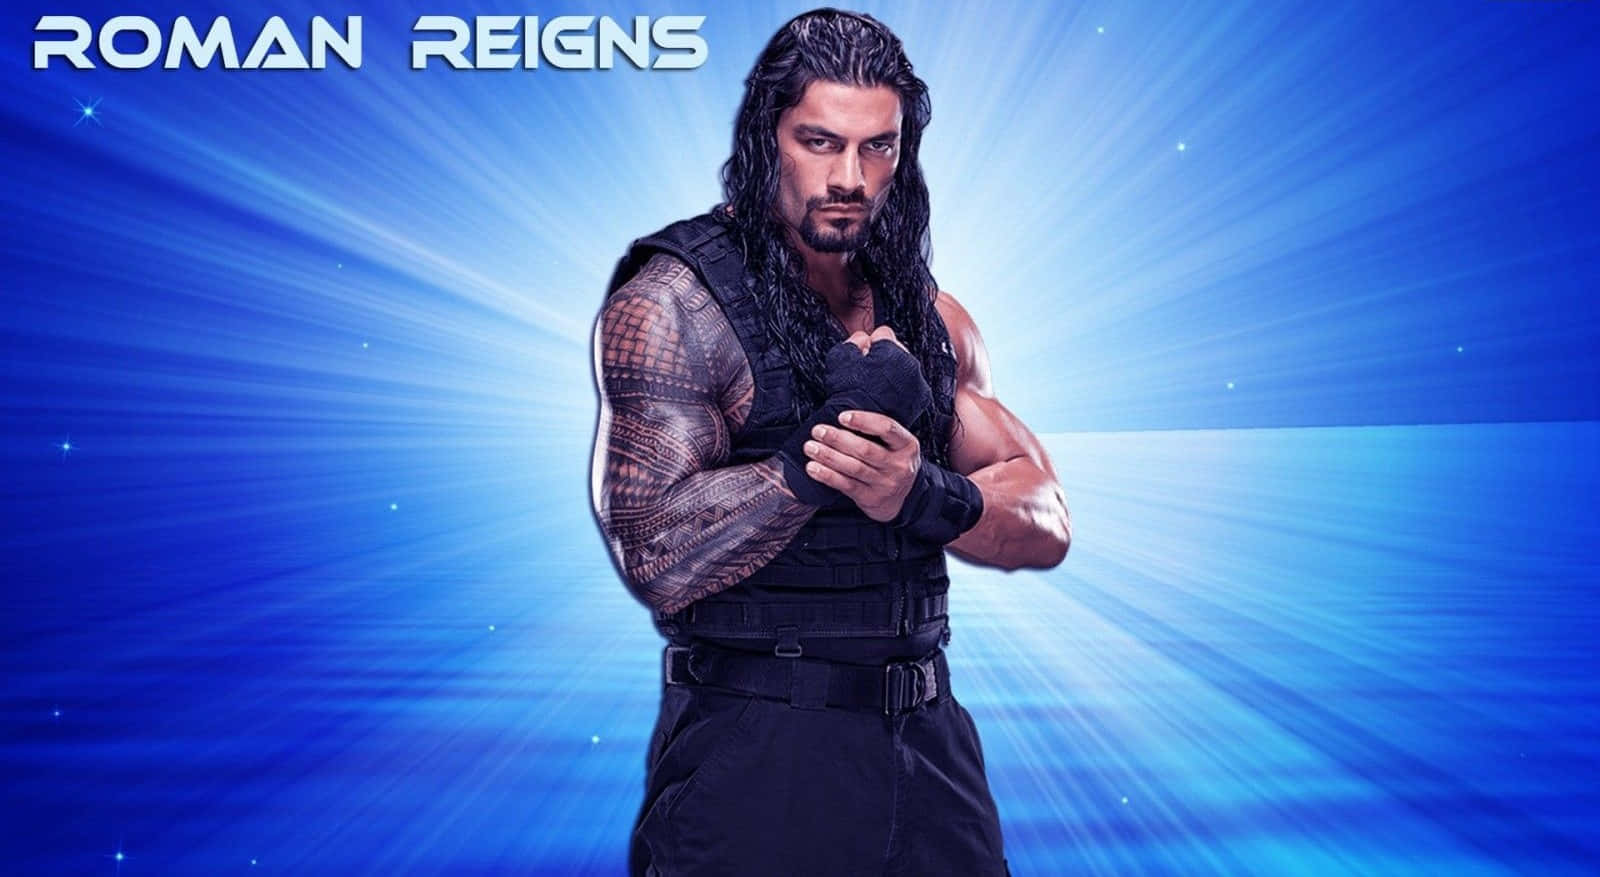 Roman Reigns - The Big Dog and Universal Champion